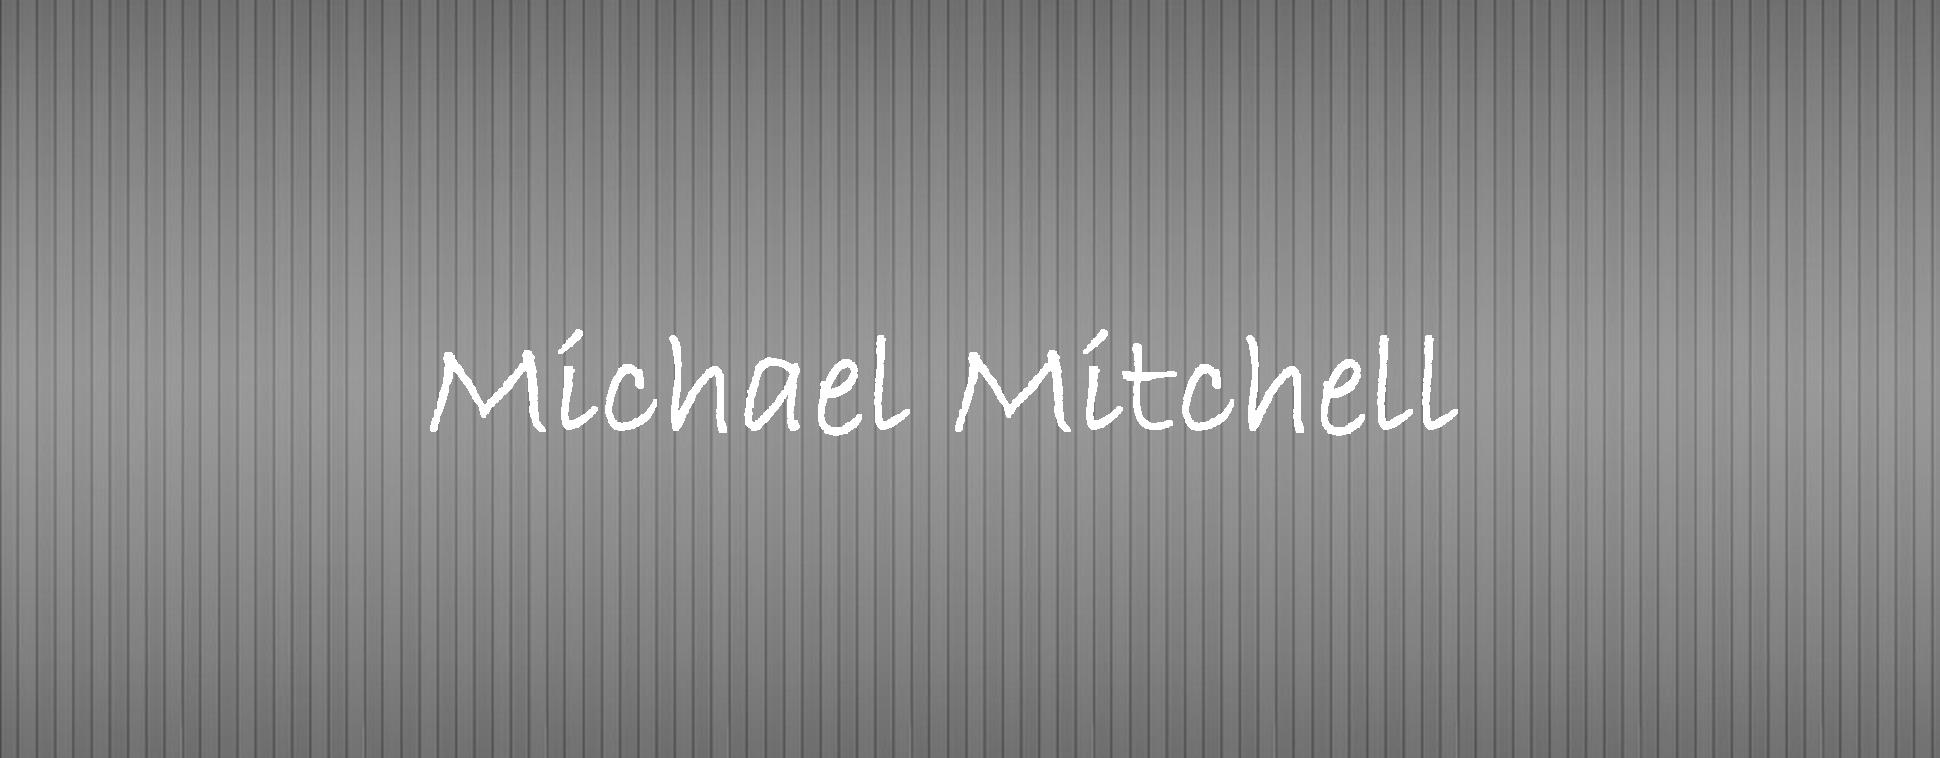 Michael Mitchell.jpg